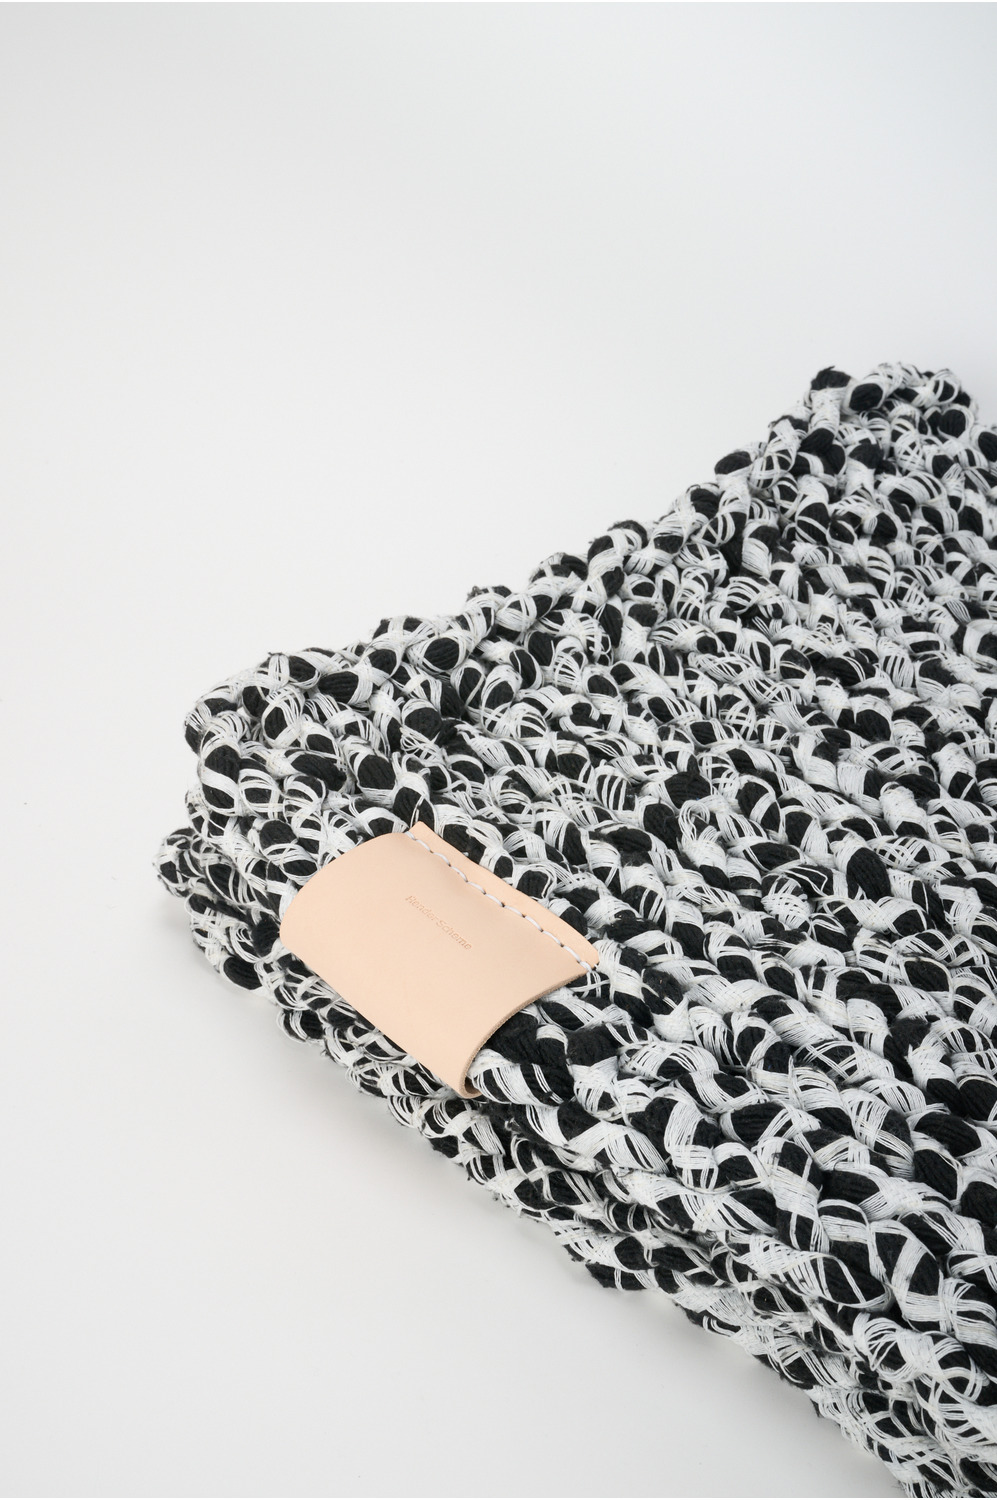 Recycled felt) hand knit rug 詳細画像 2